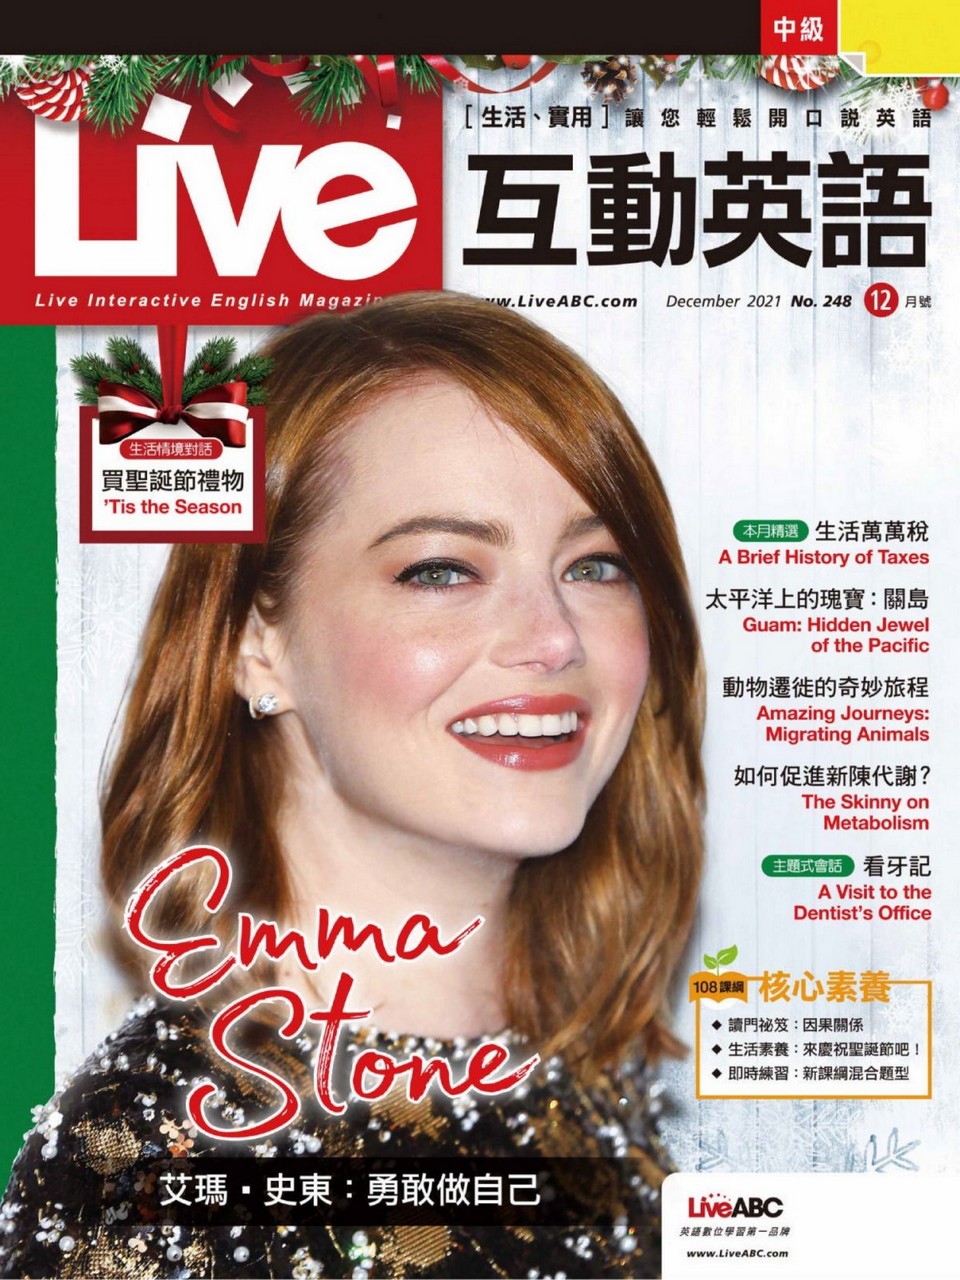 Emma Stone Live Magazine December